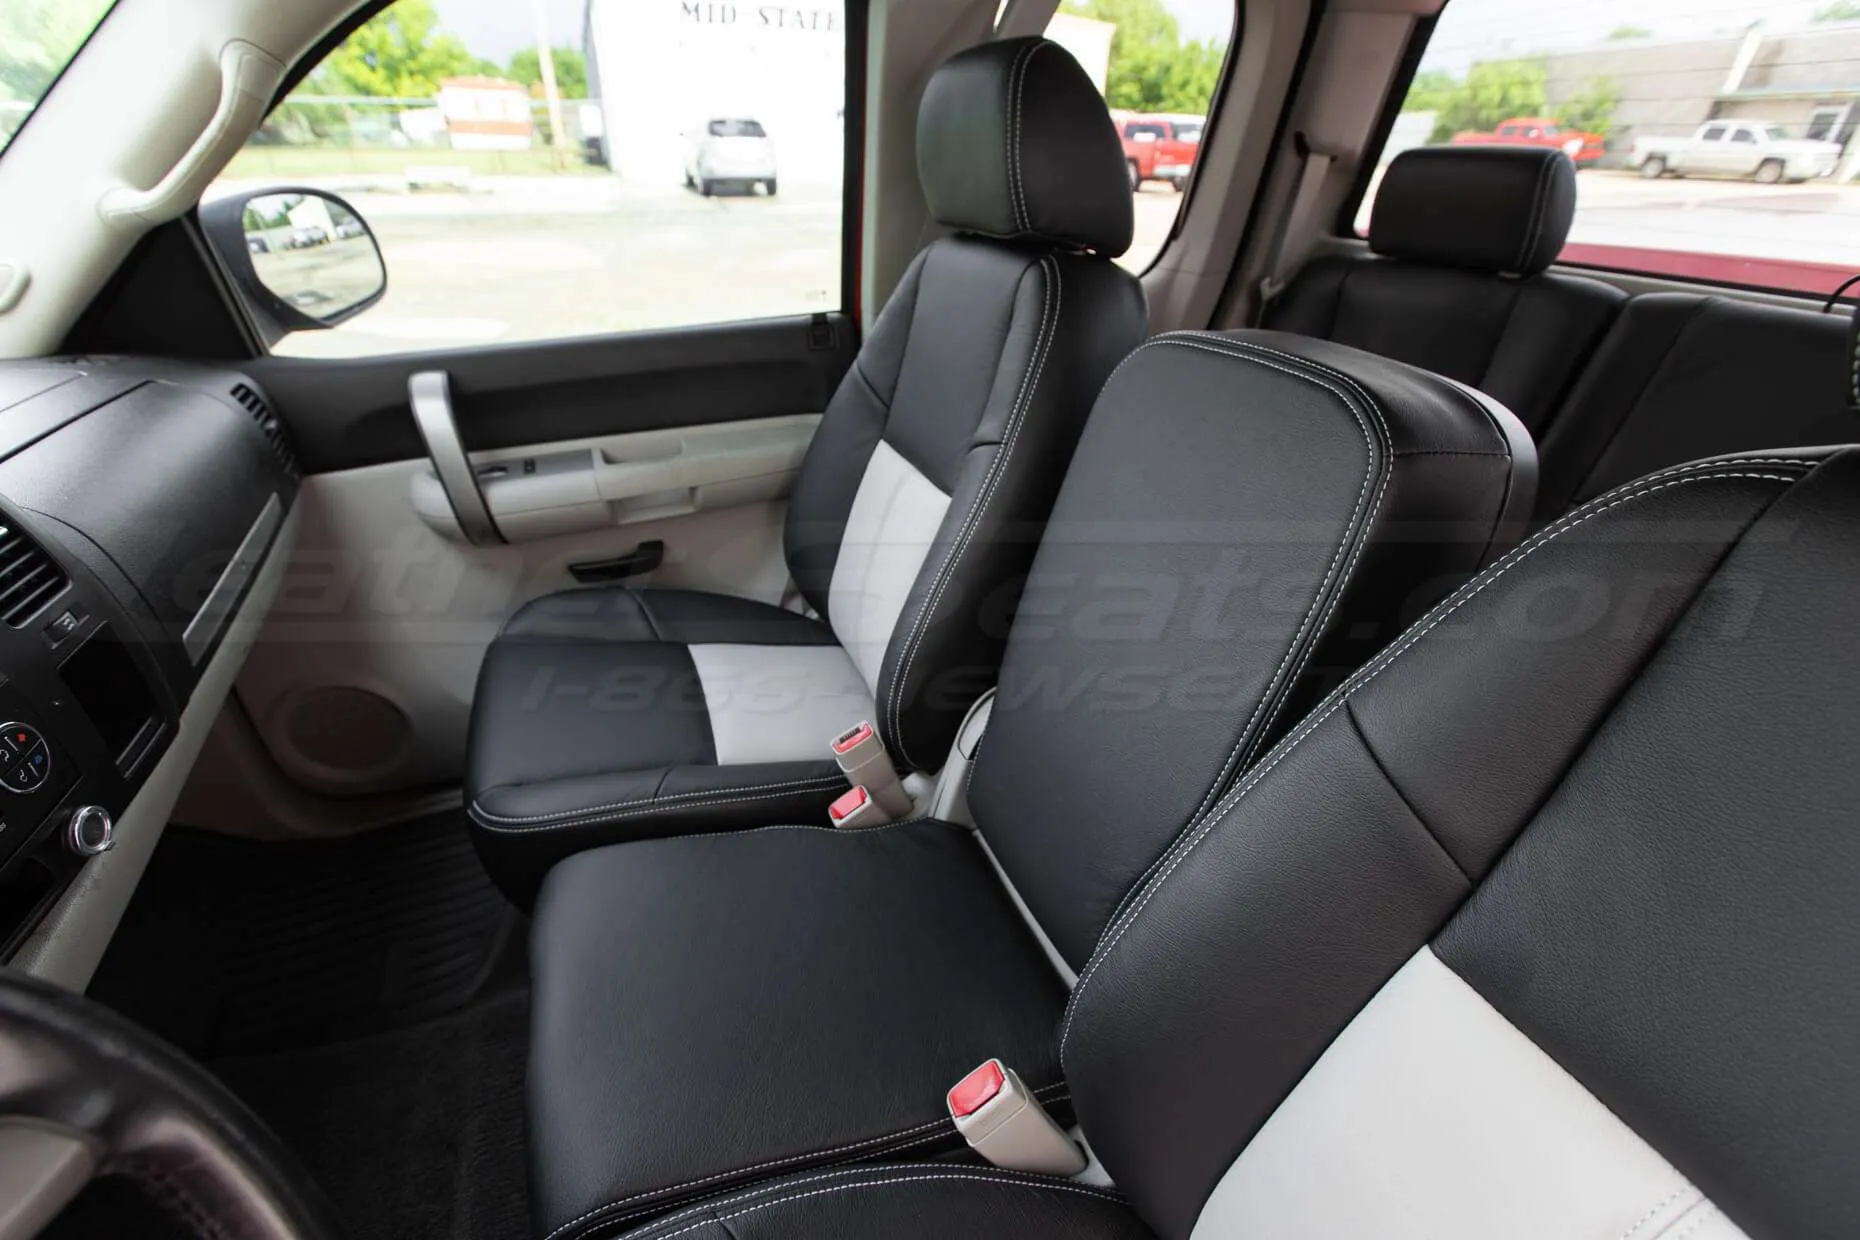 2003-2007 Chevrolet Silverado Upholstery Kit - Black & Dove Grey - Installed - Center and passenger seat